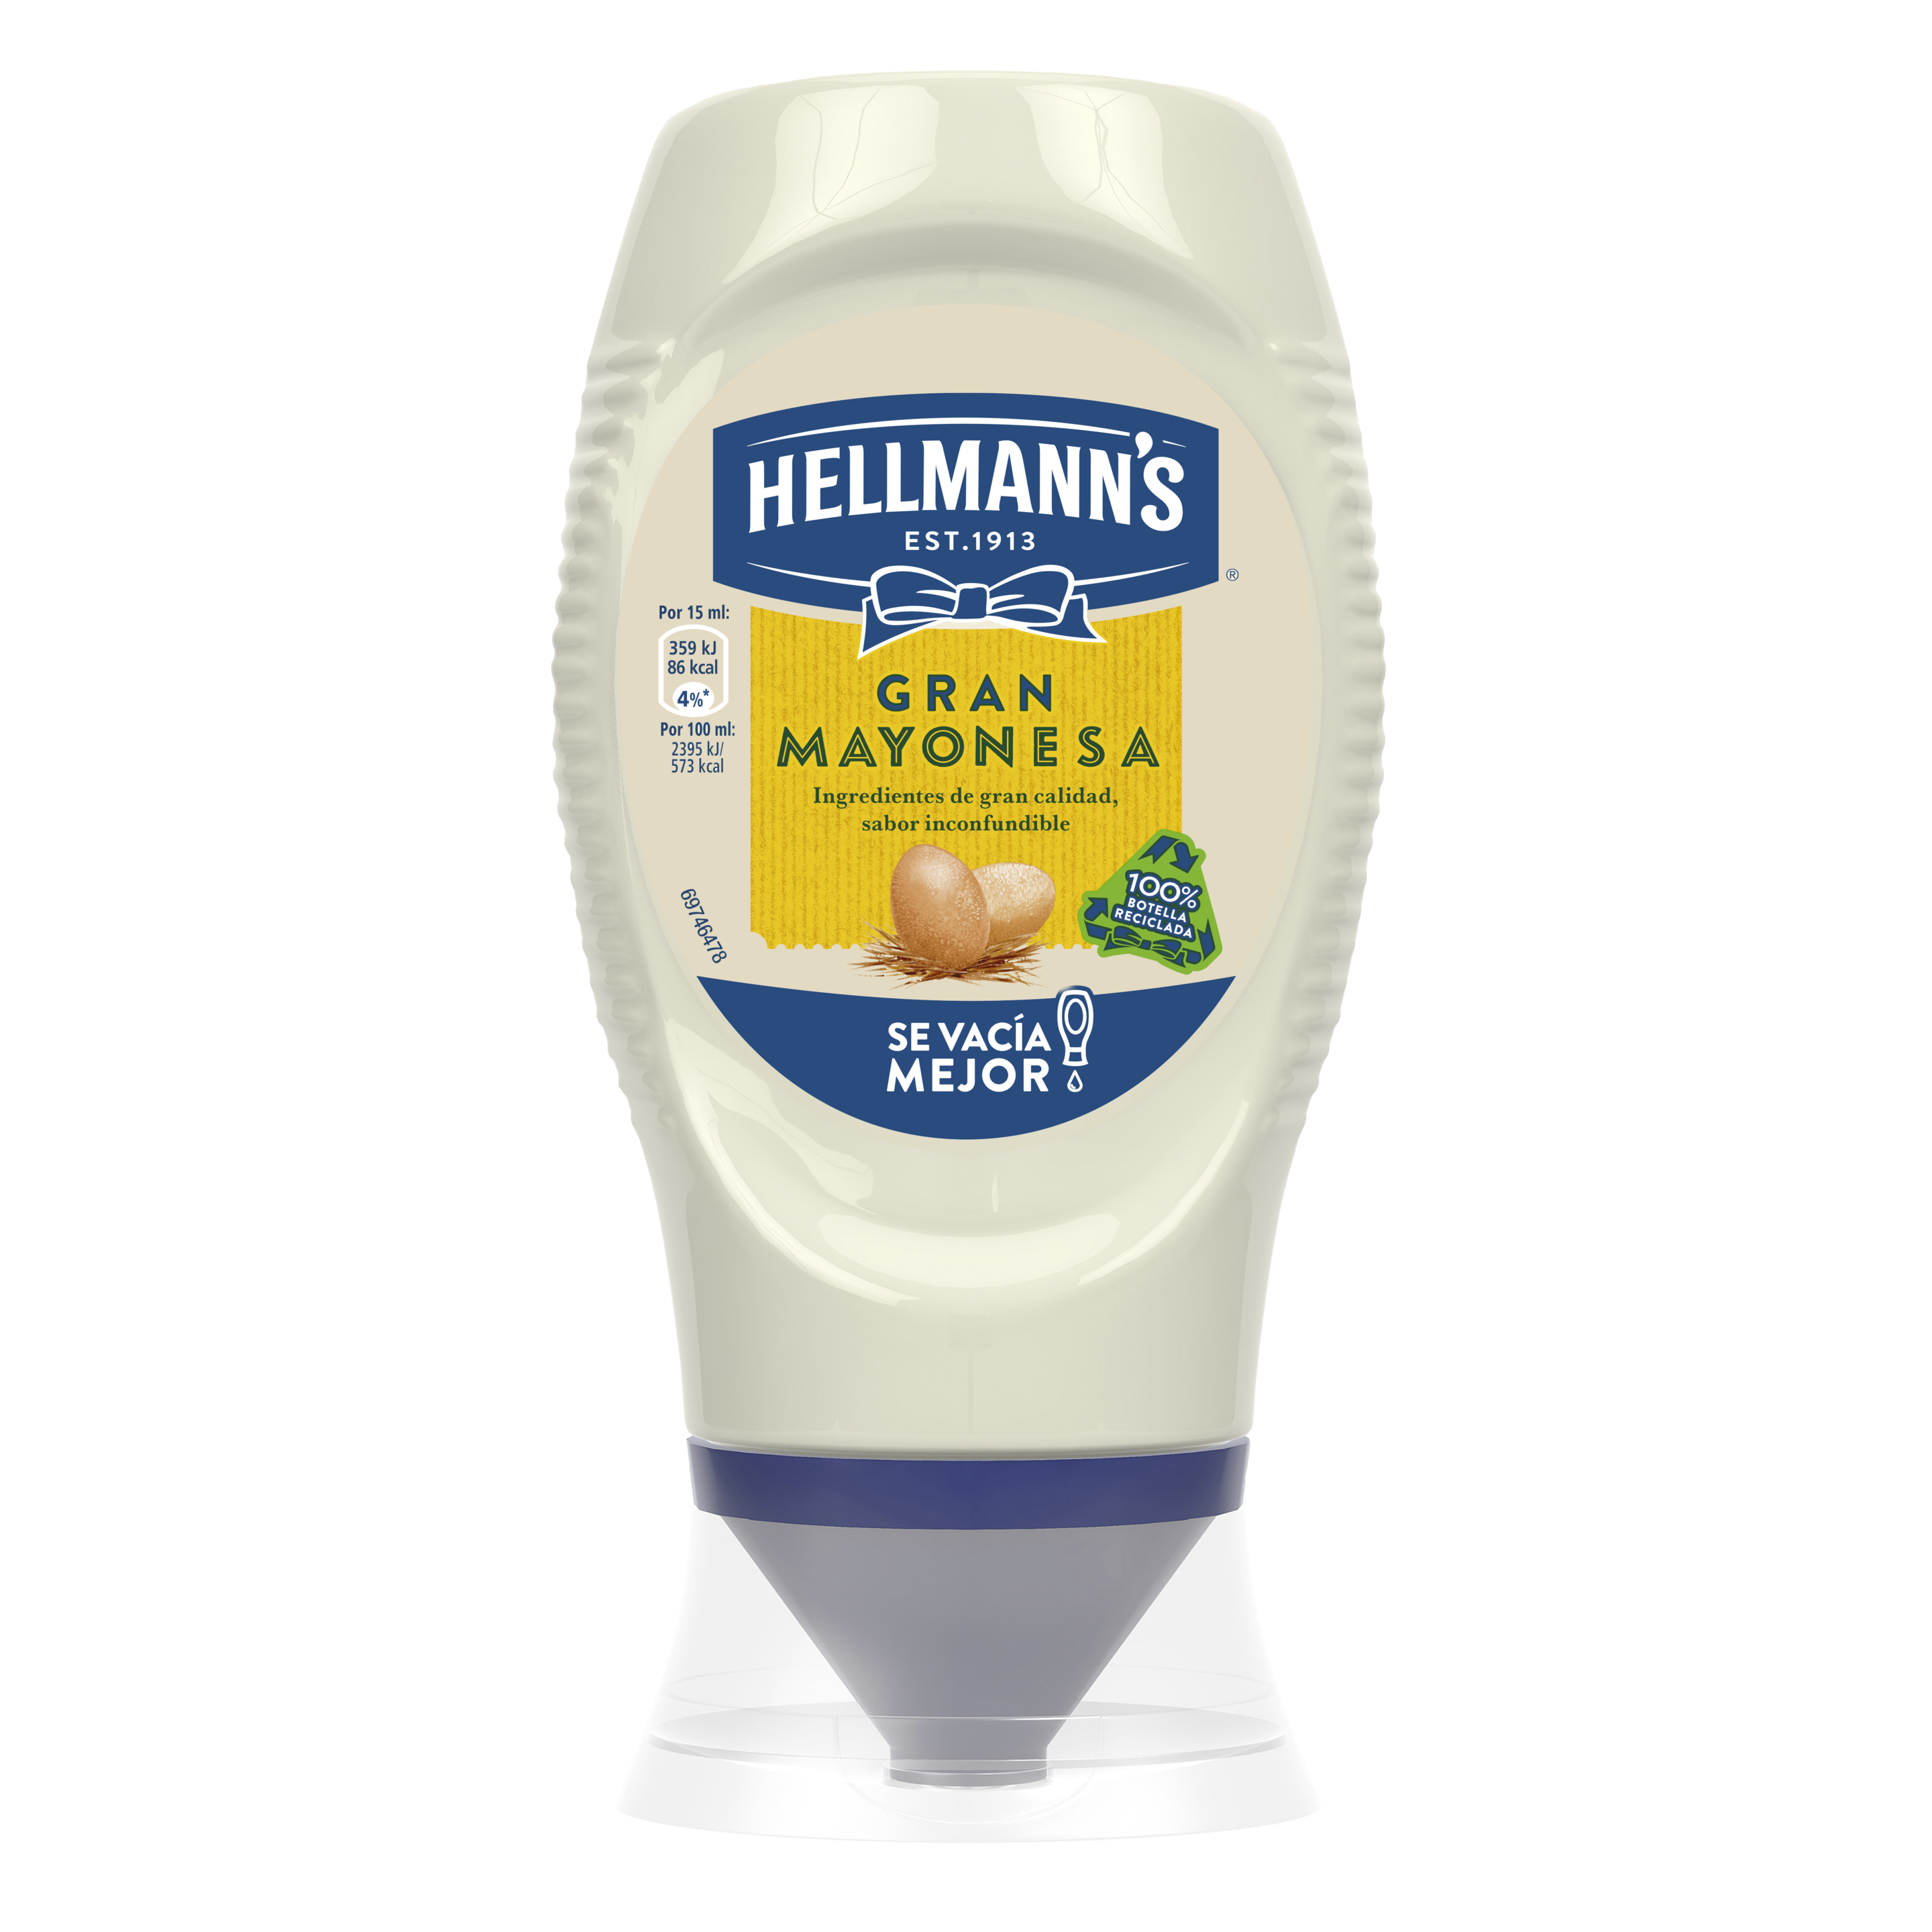 Hellmann's Gran Mayonesa (250ml)